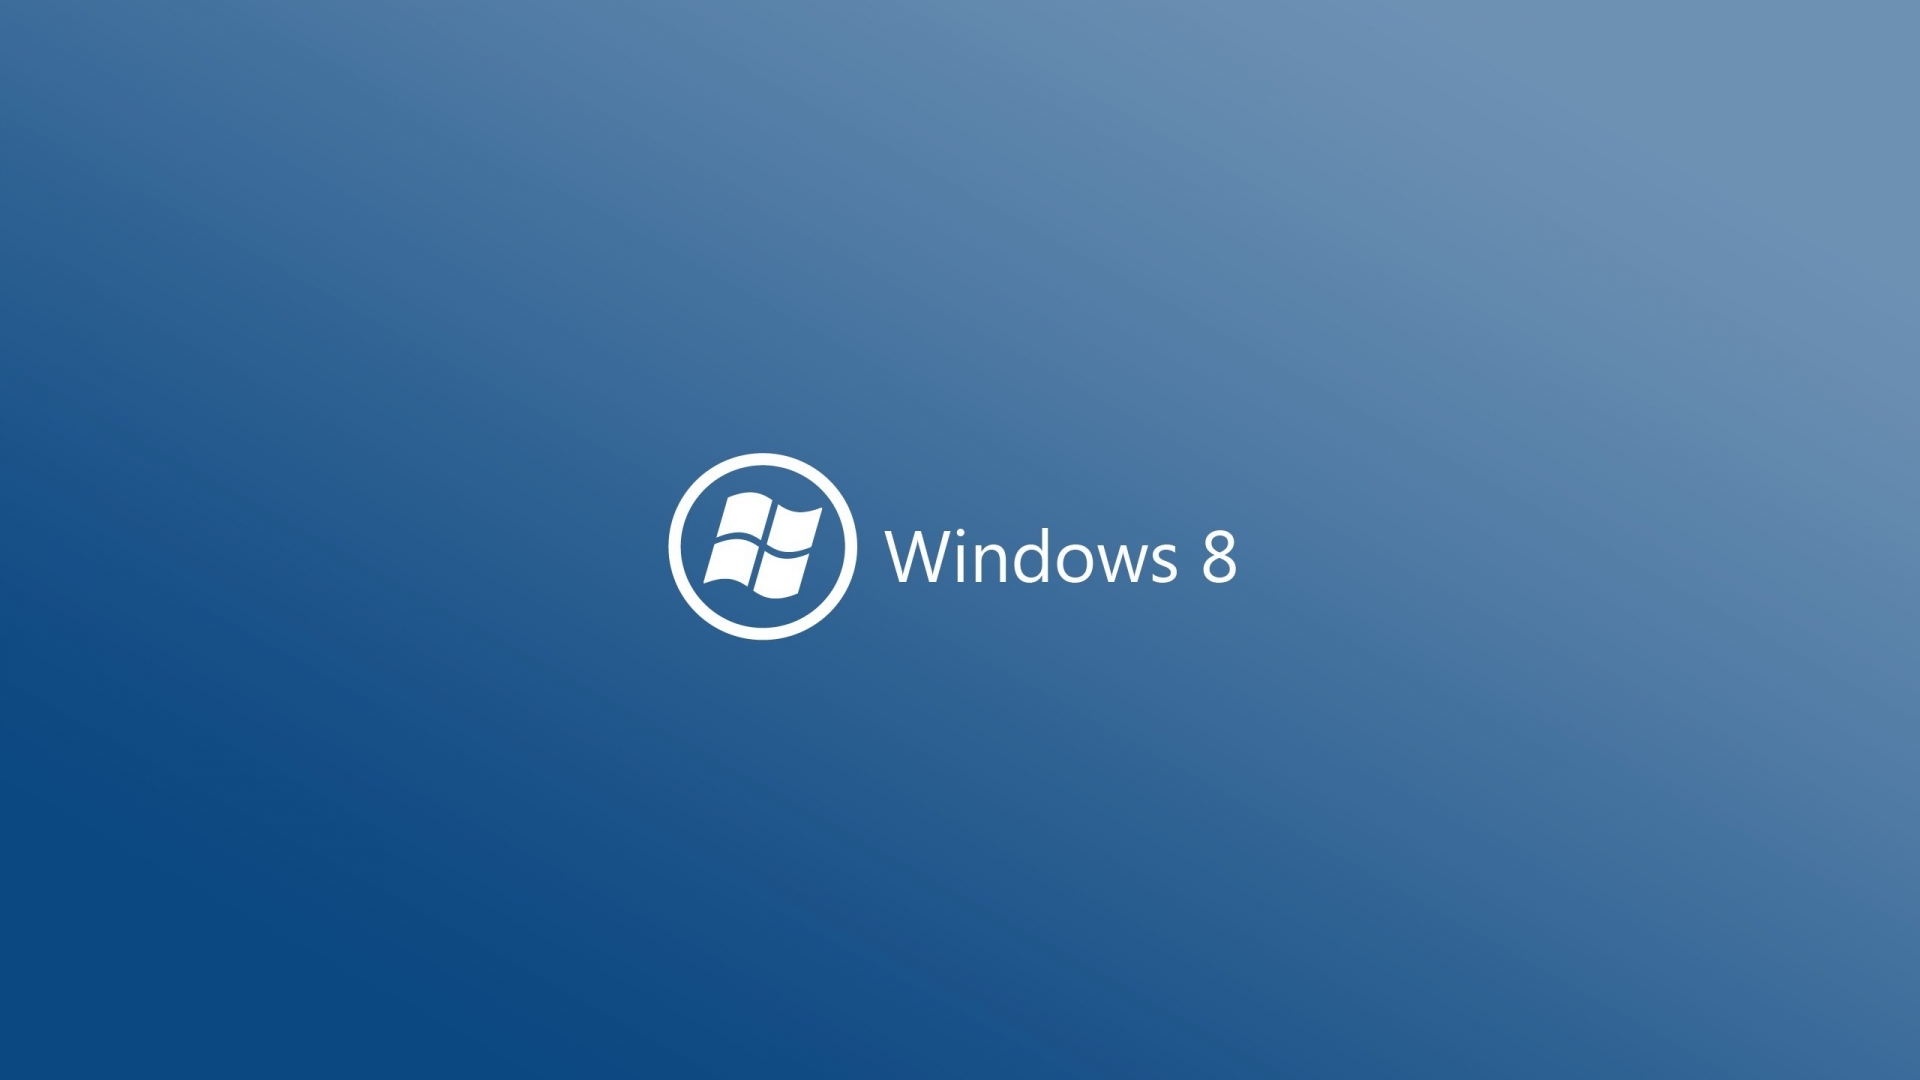 Windows 8 Logo for 1920 x 1080 HDTV 1080p resolution